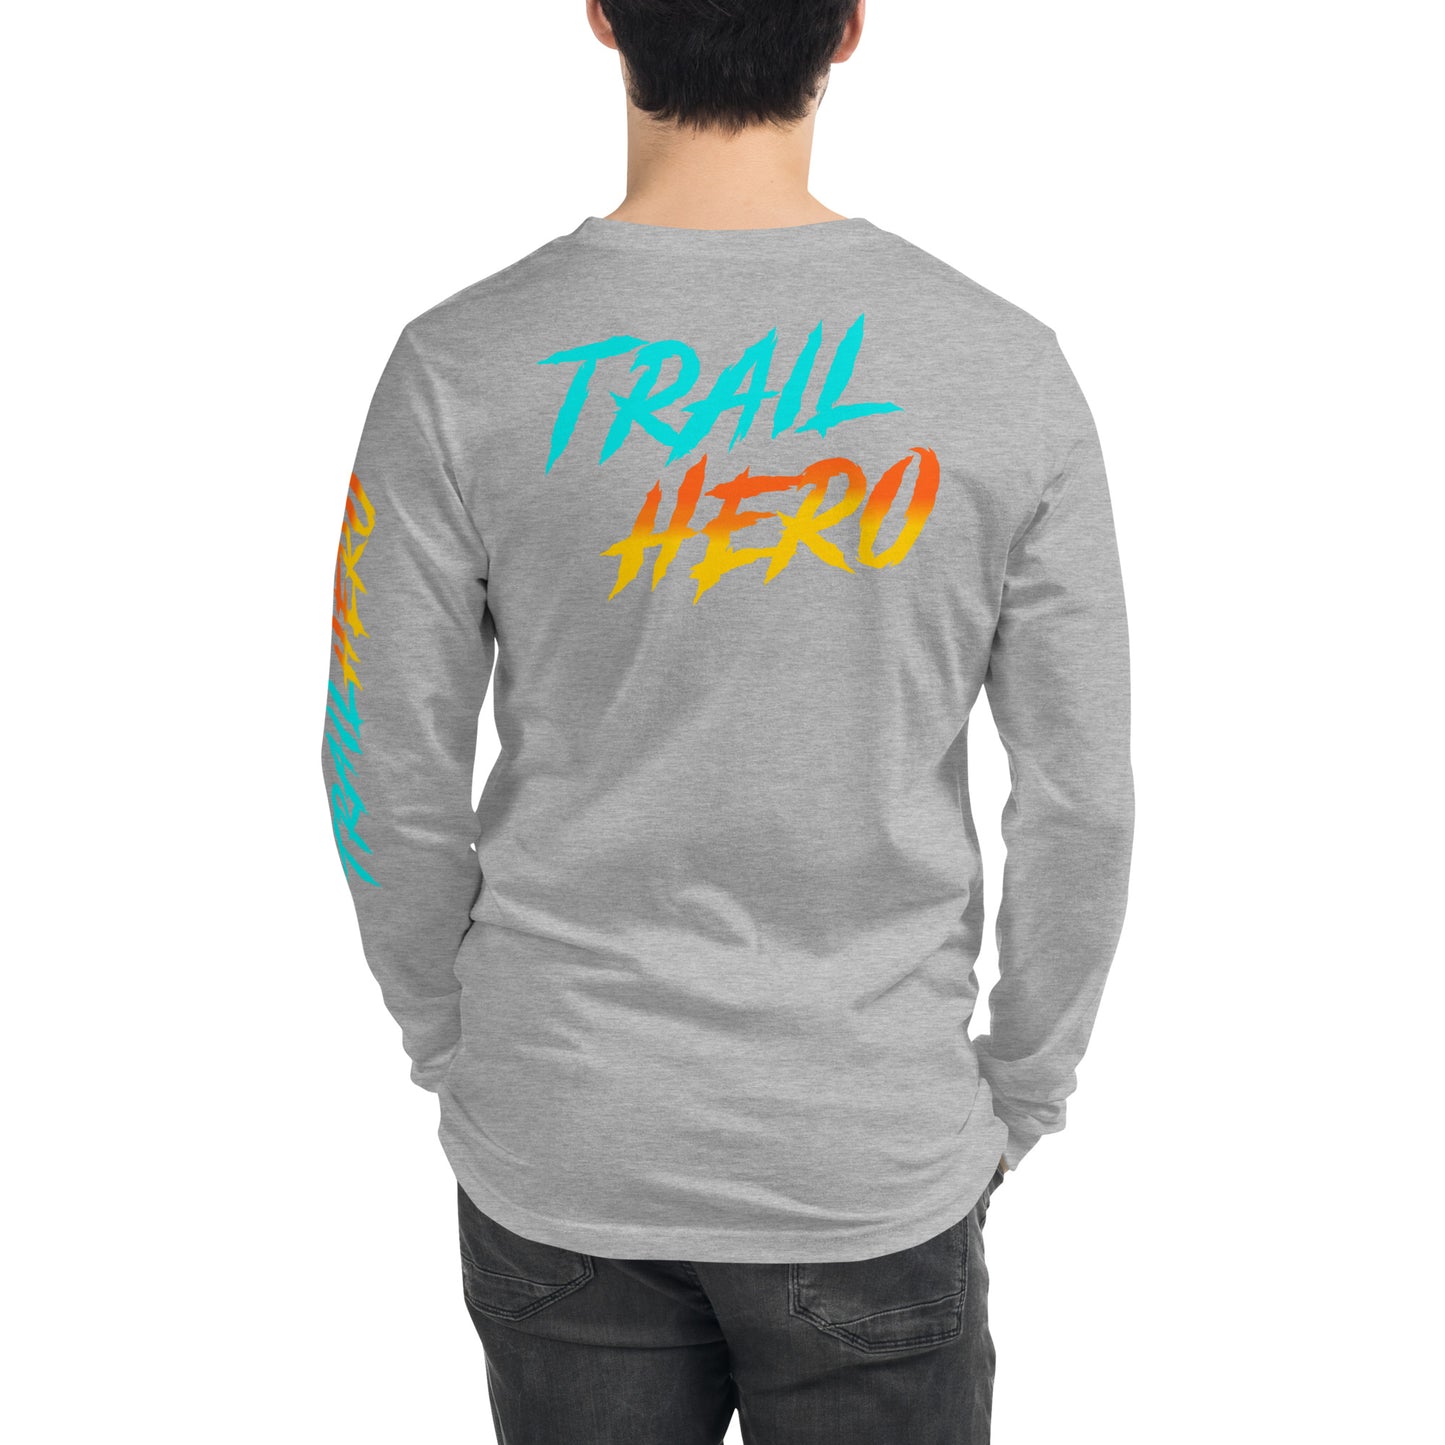 Trail Hero - Unisex - 100% Cotton Long Sleeve Tee - 7 Colors